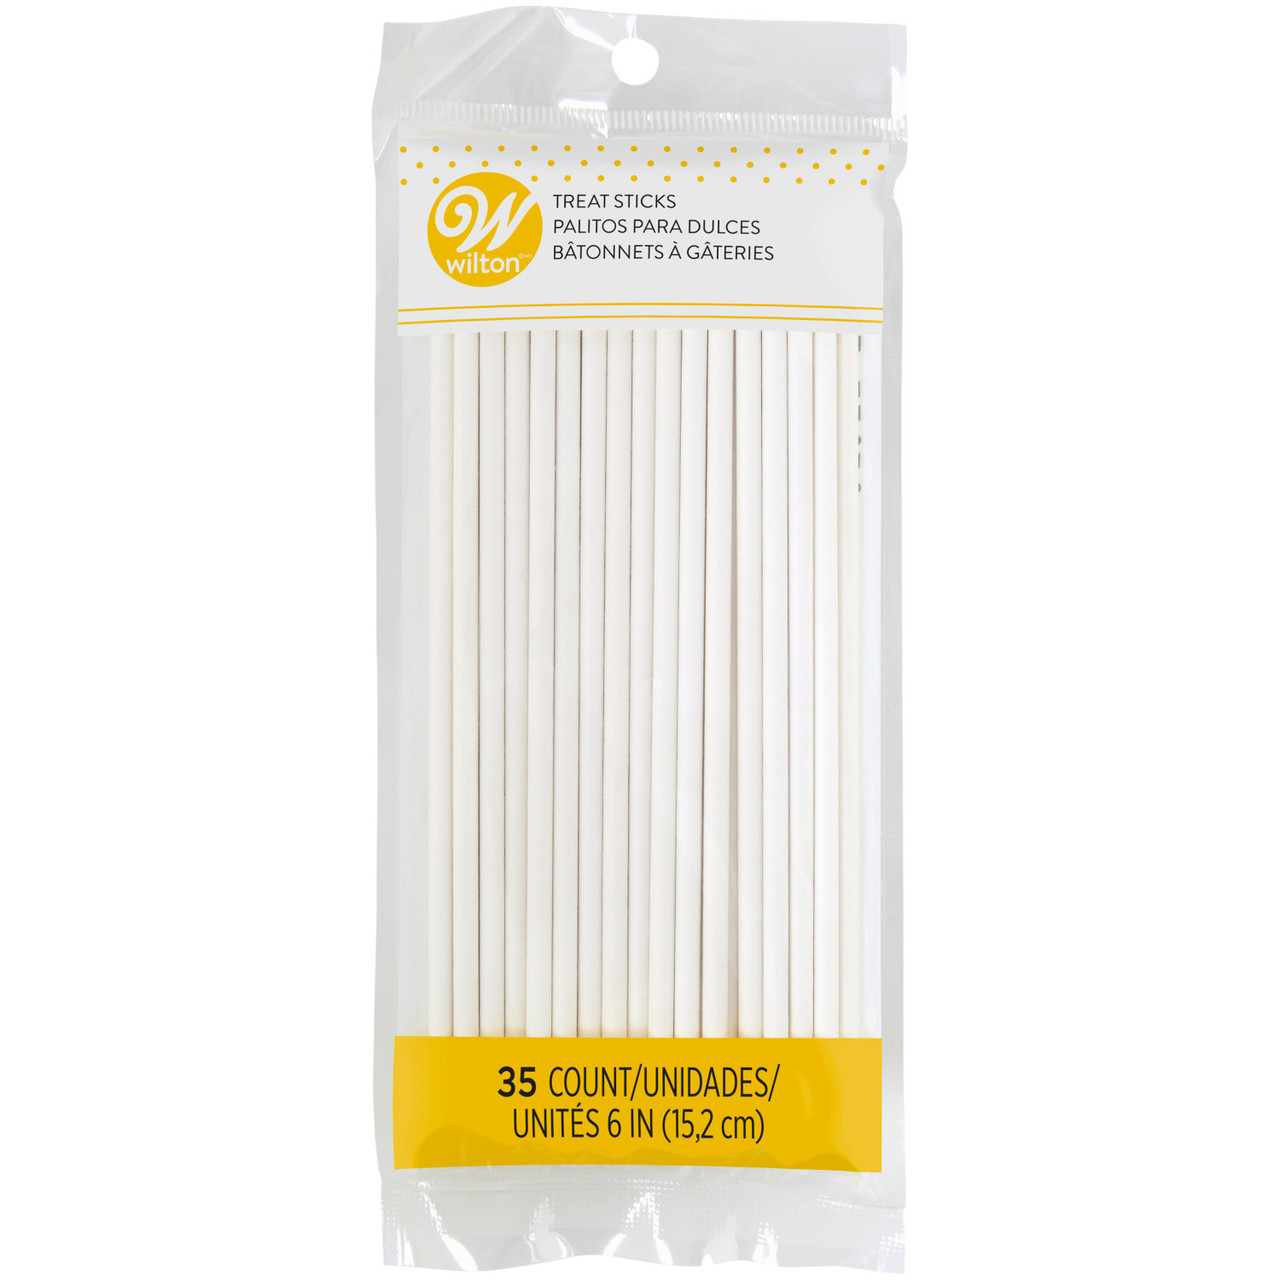 White 6-Inch Lollipop Sticks, 35-Count Pack